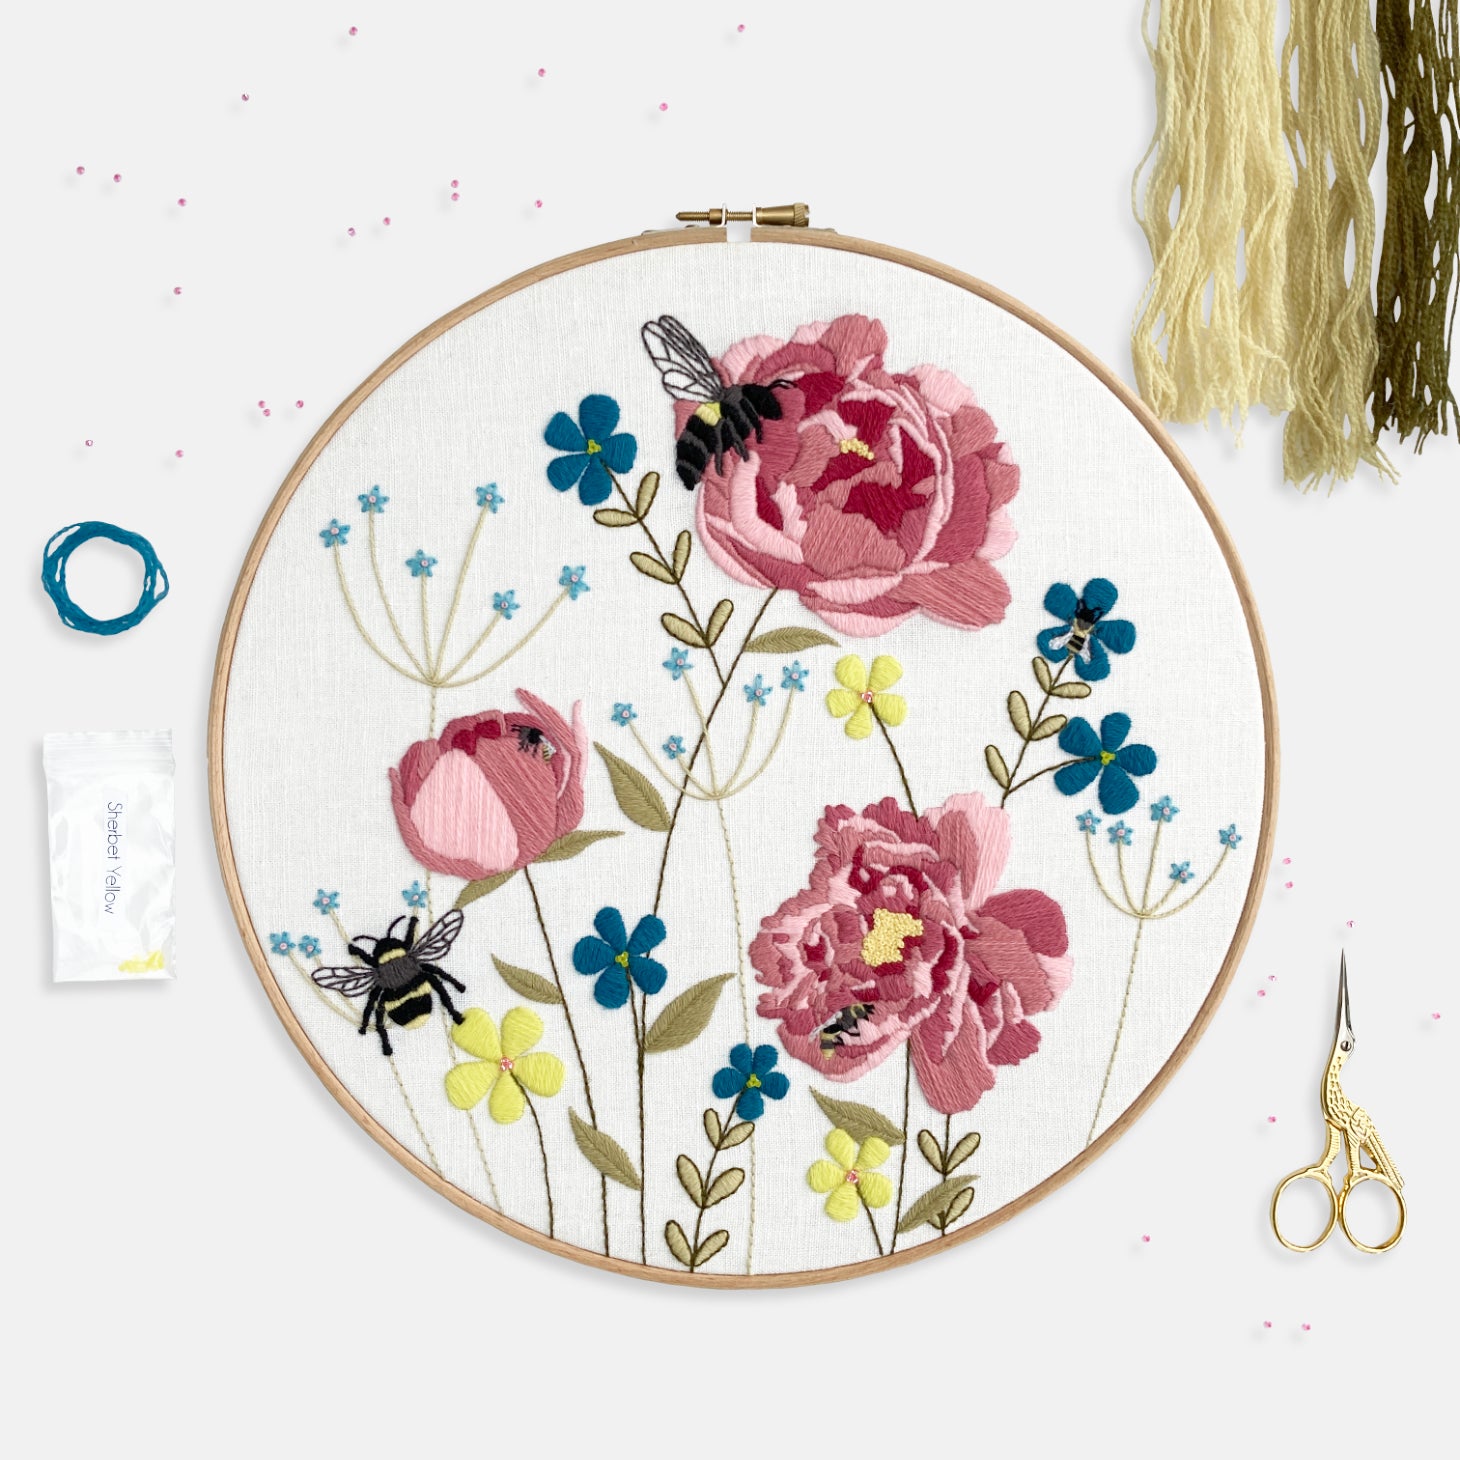 Peony Embroidery Kit | Kirsty Freeman Design | Reviews on Judge.me